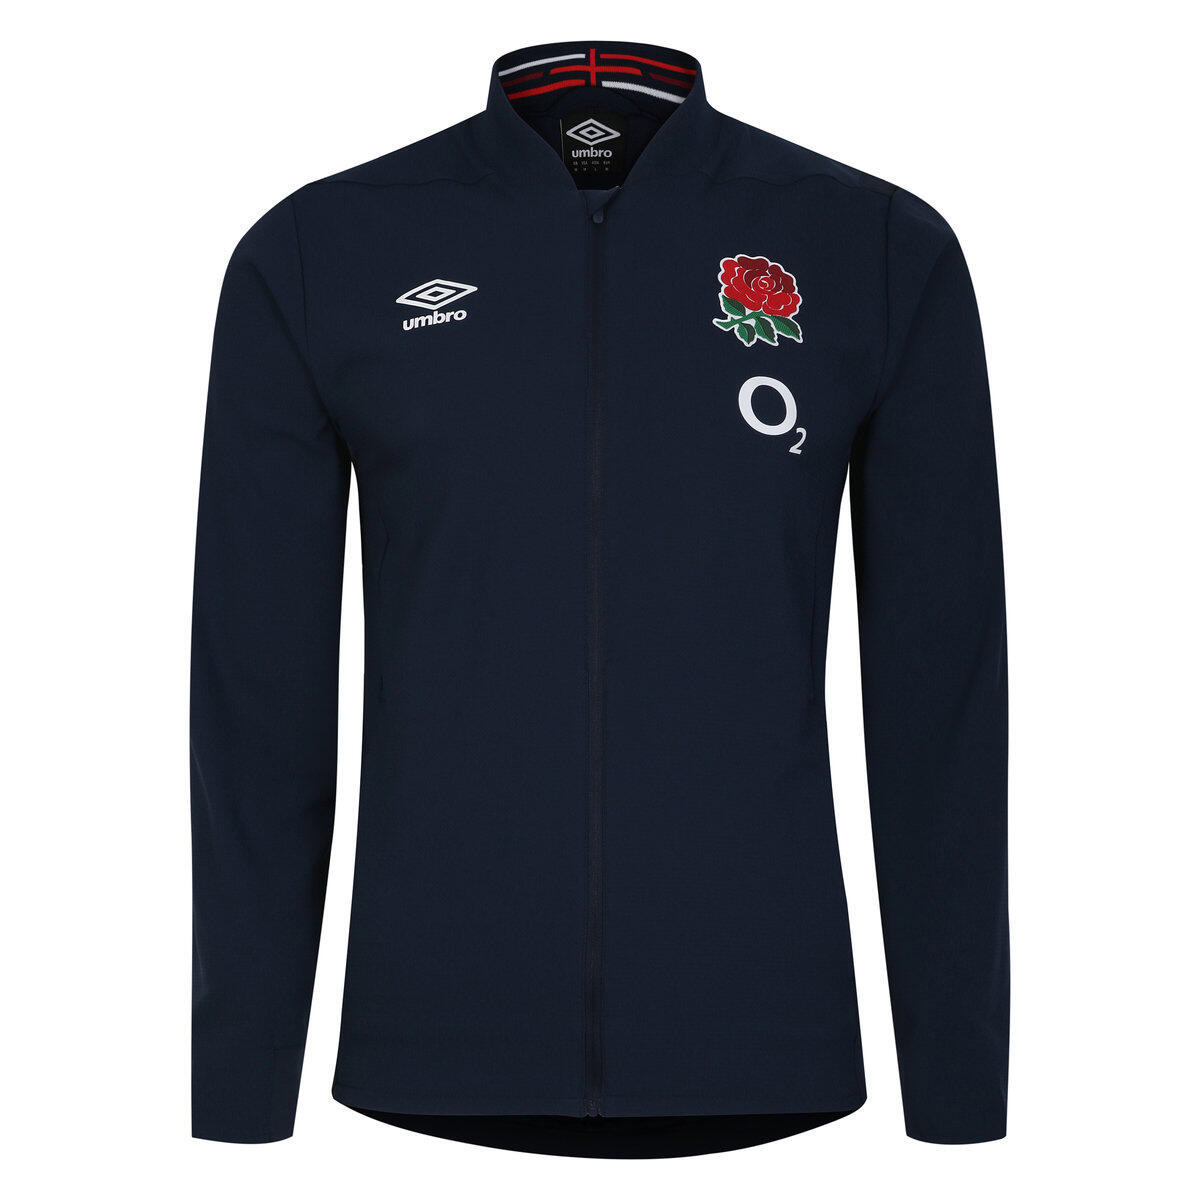 UMBRO Childrens/Kids 23/24 England Rugby Anthem Jacket (Navy Blazer)